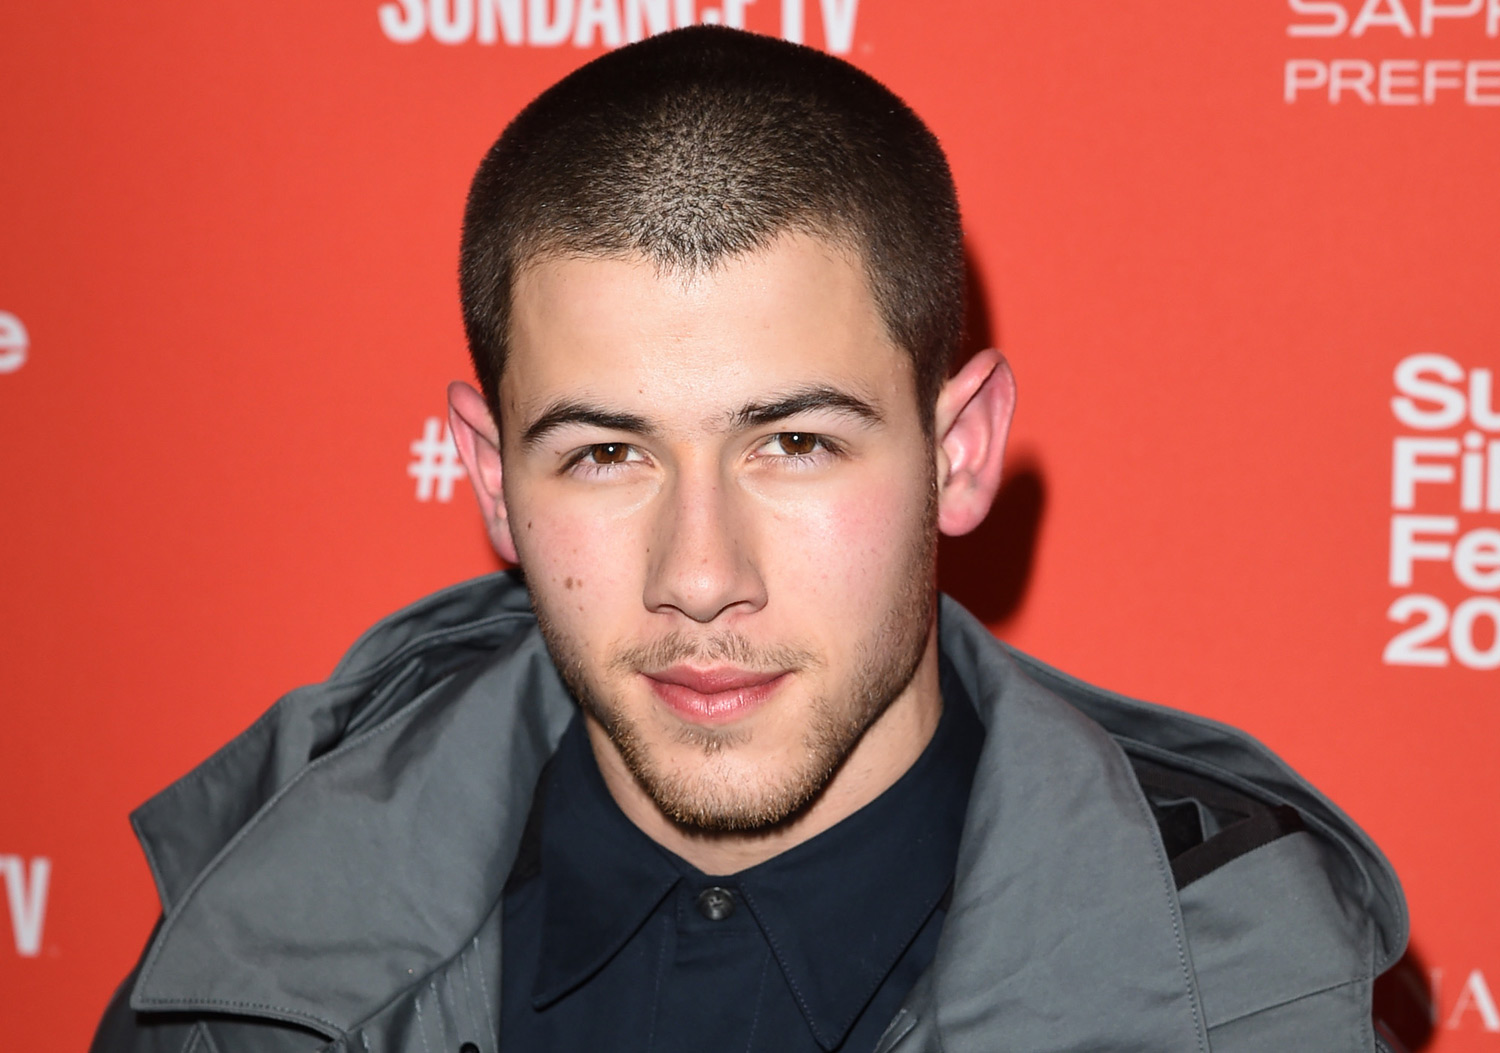 Nick Jonas Sundance Film Goat Will Make TV Debut On MTV Nick Jonas